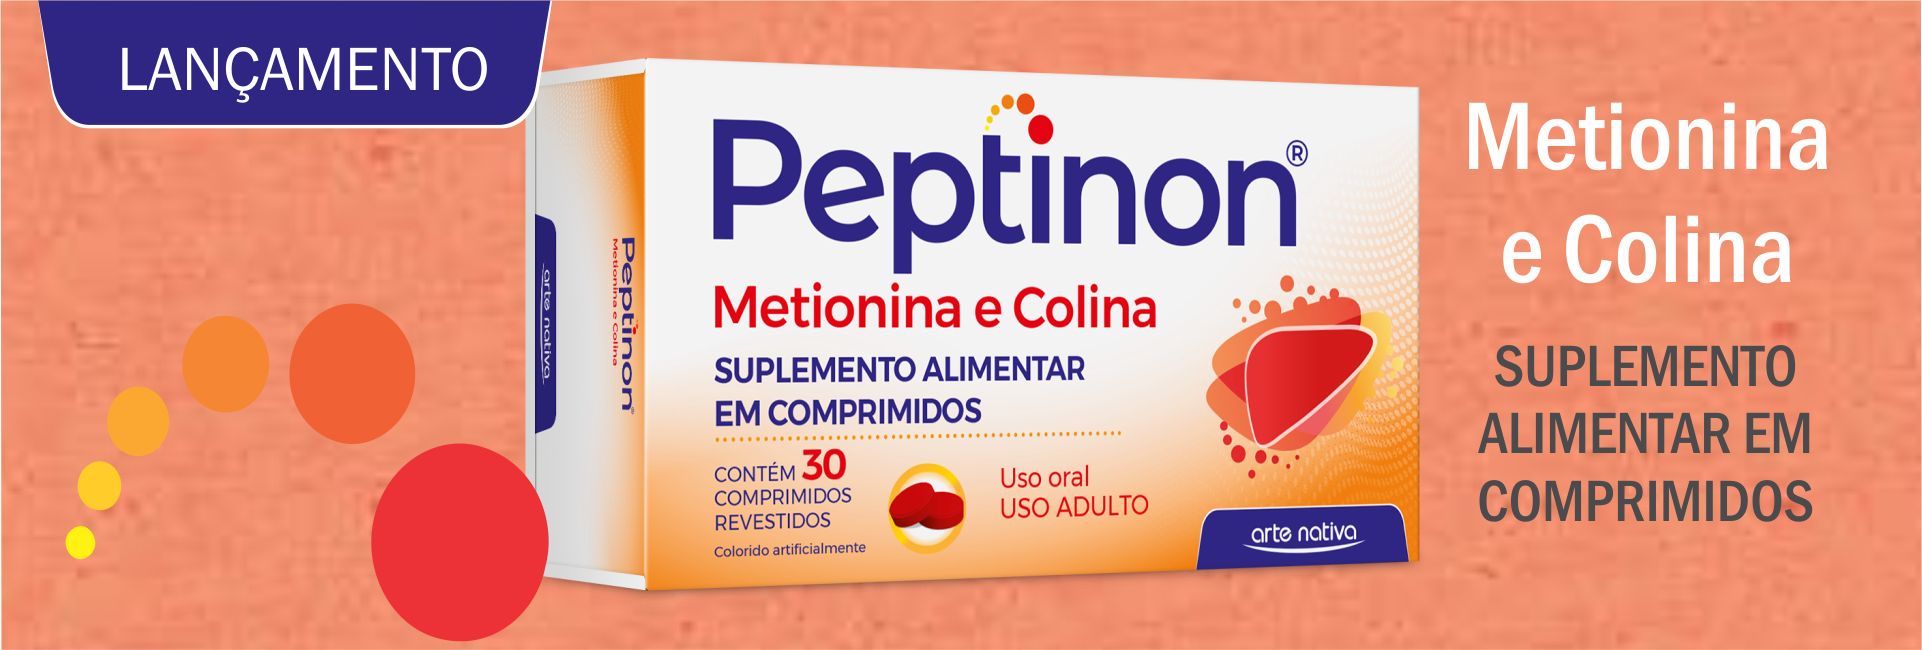 Peptinon